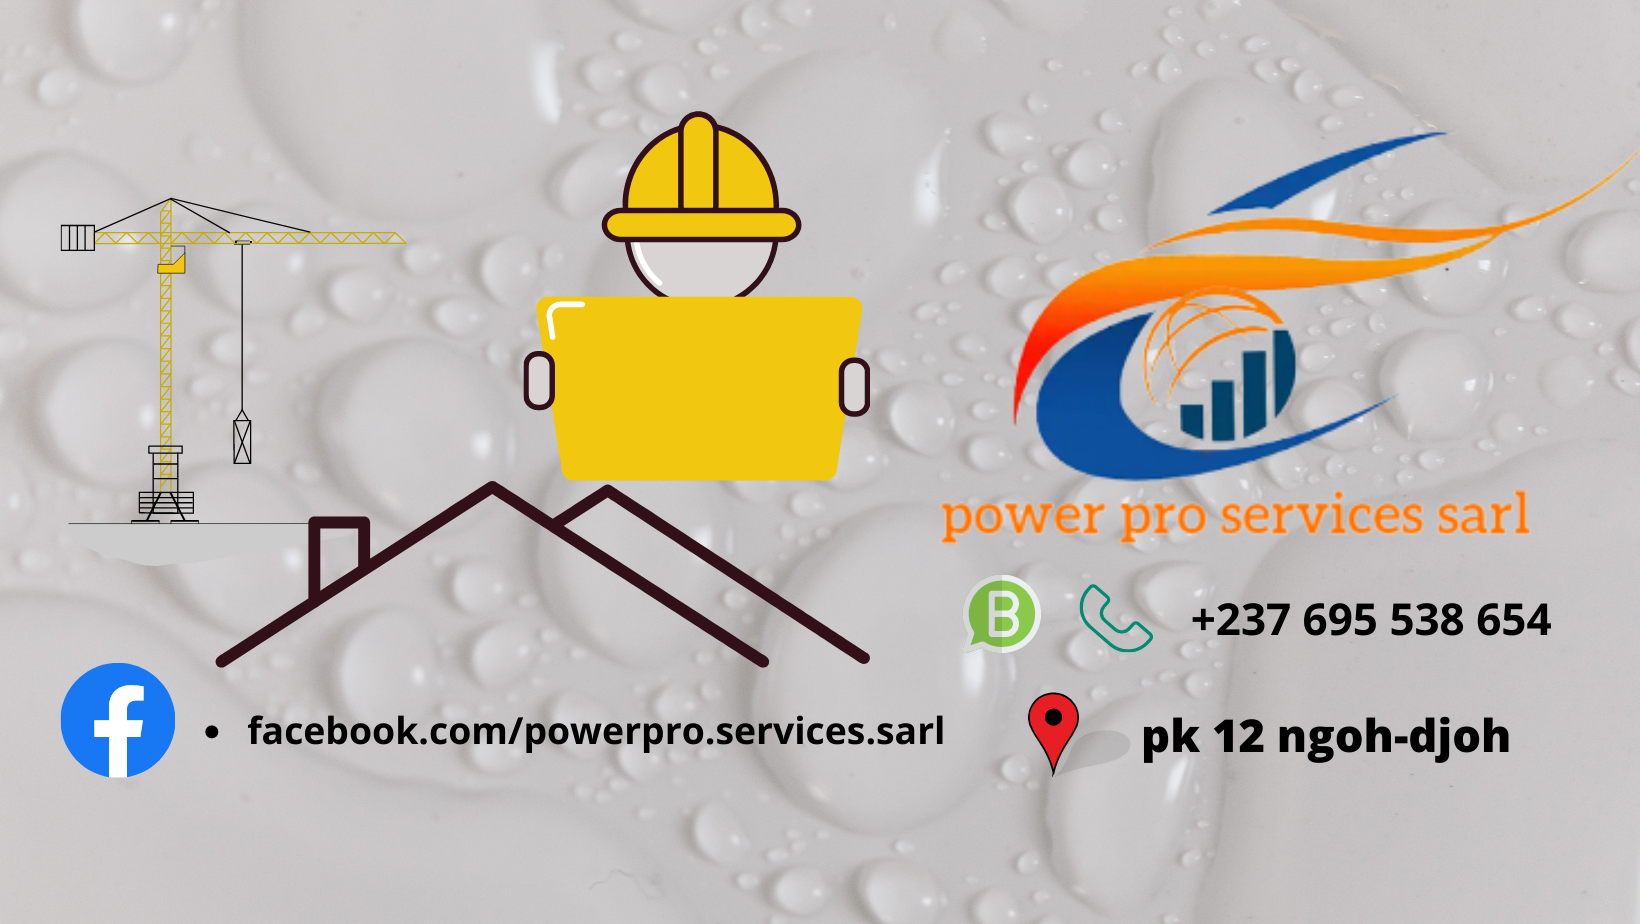 powerpro services sarl